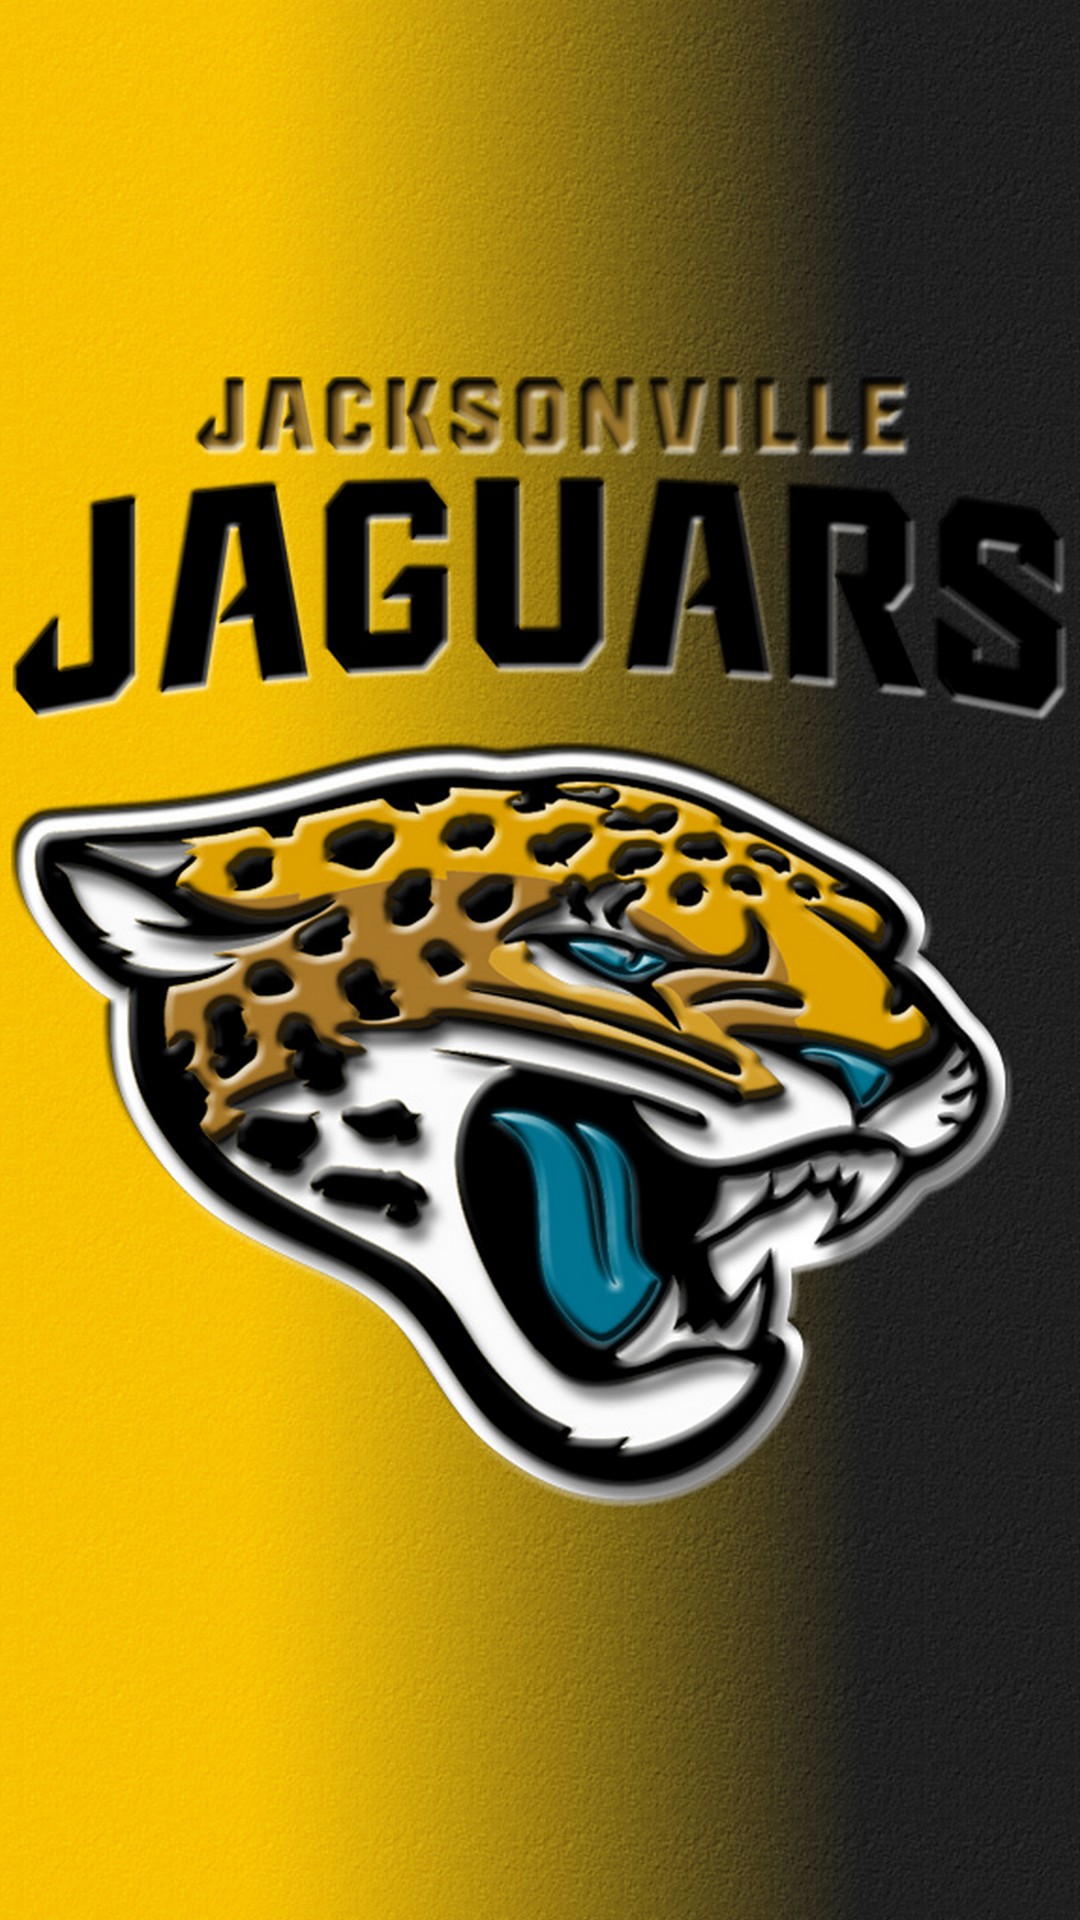 Jacksonville Jaguars HD Wallpaper For iPhone | 2020 NFL ...